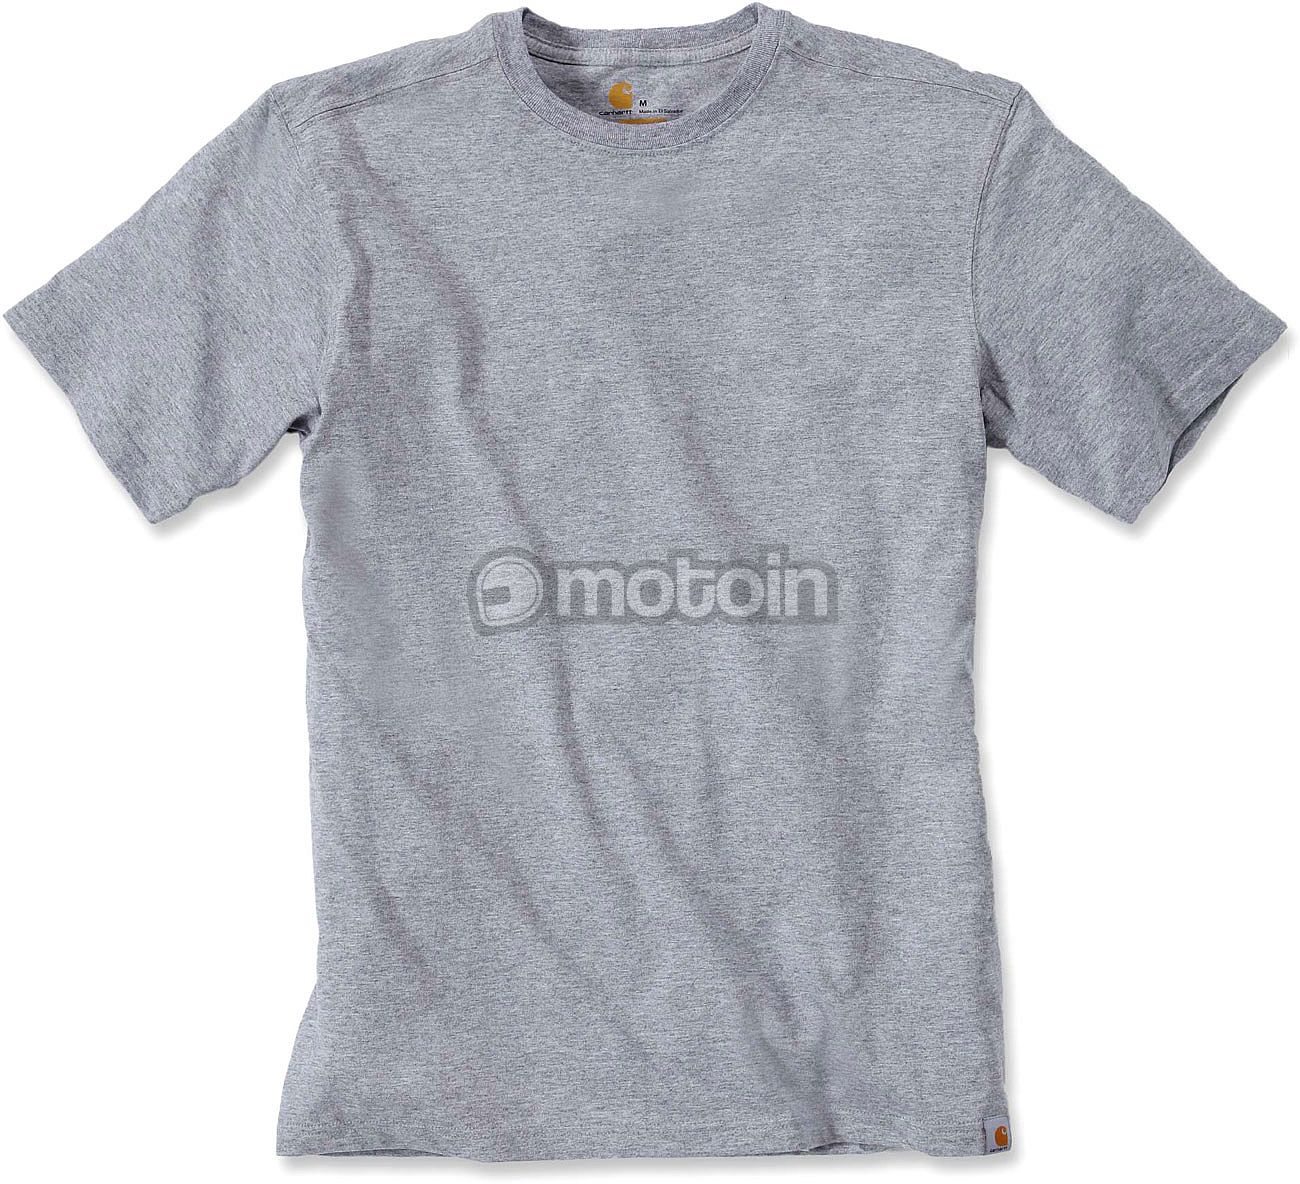 Carhartt Maddock, T-Shirt